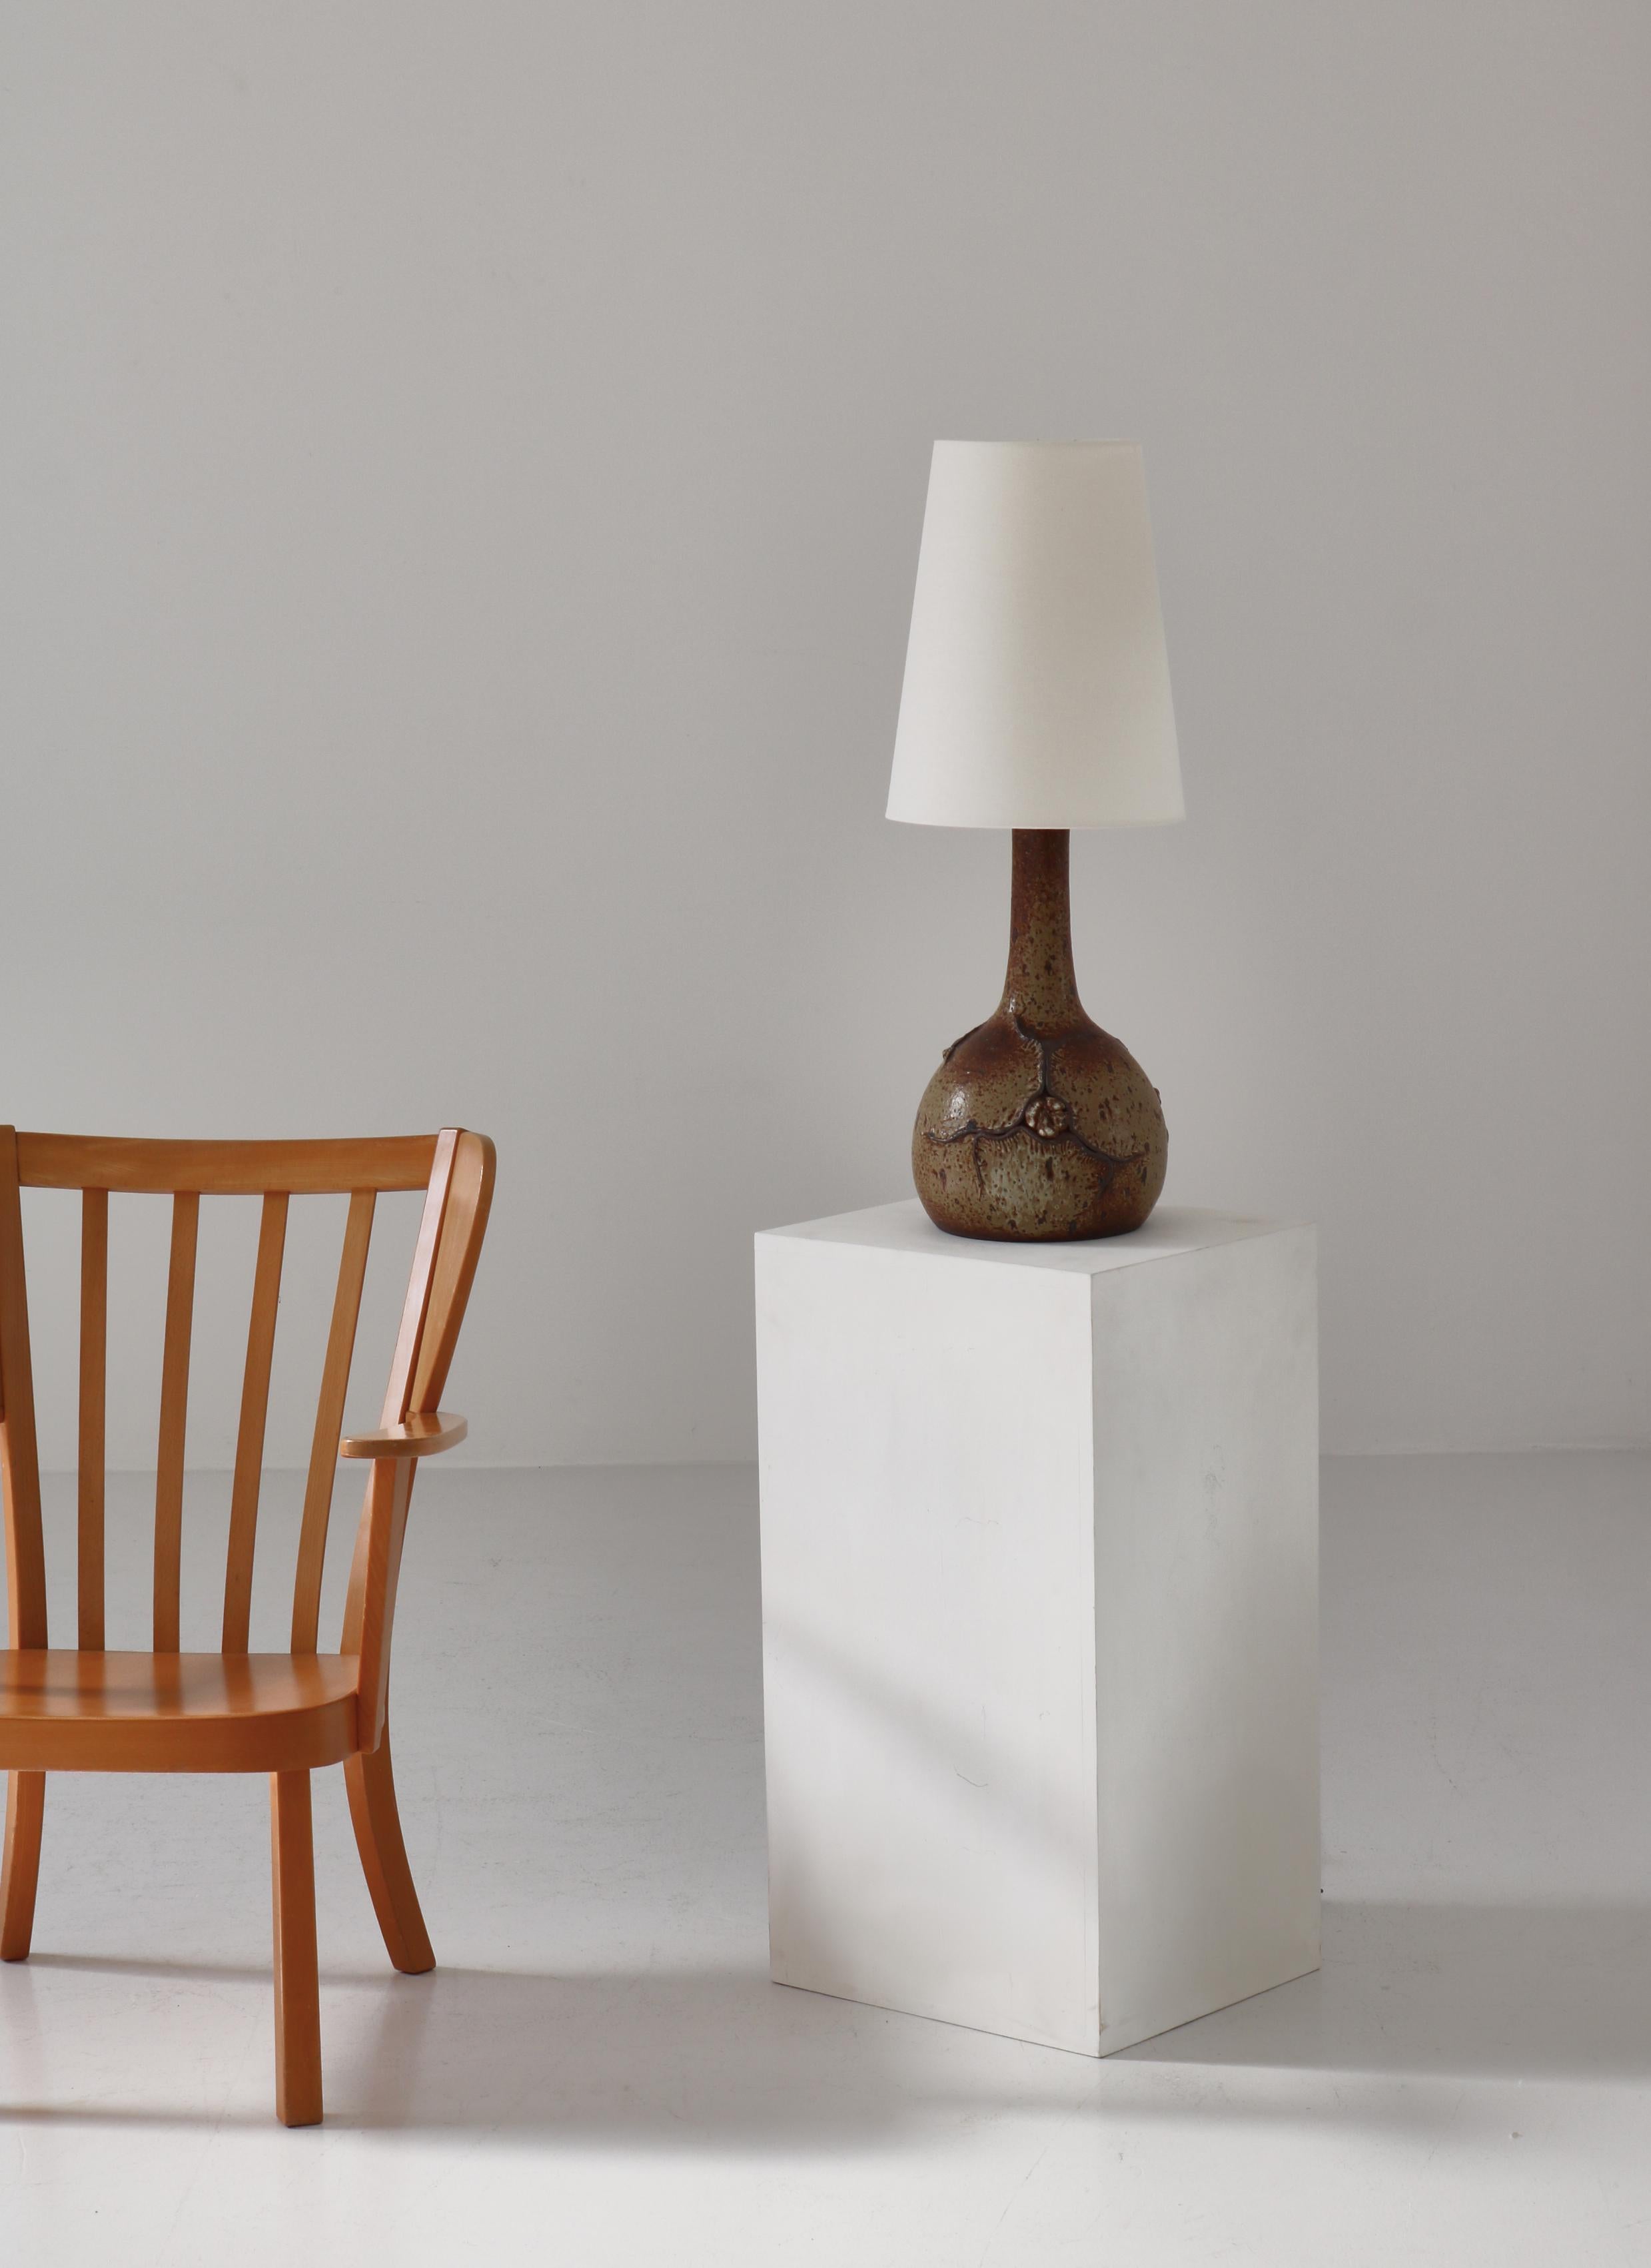 Large Danish Modern Ceramic Floor Lamp by Still Keramik Earth Color's, 1960s For Sale 6